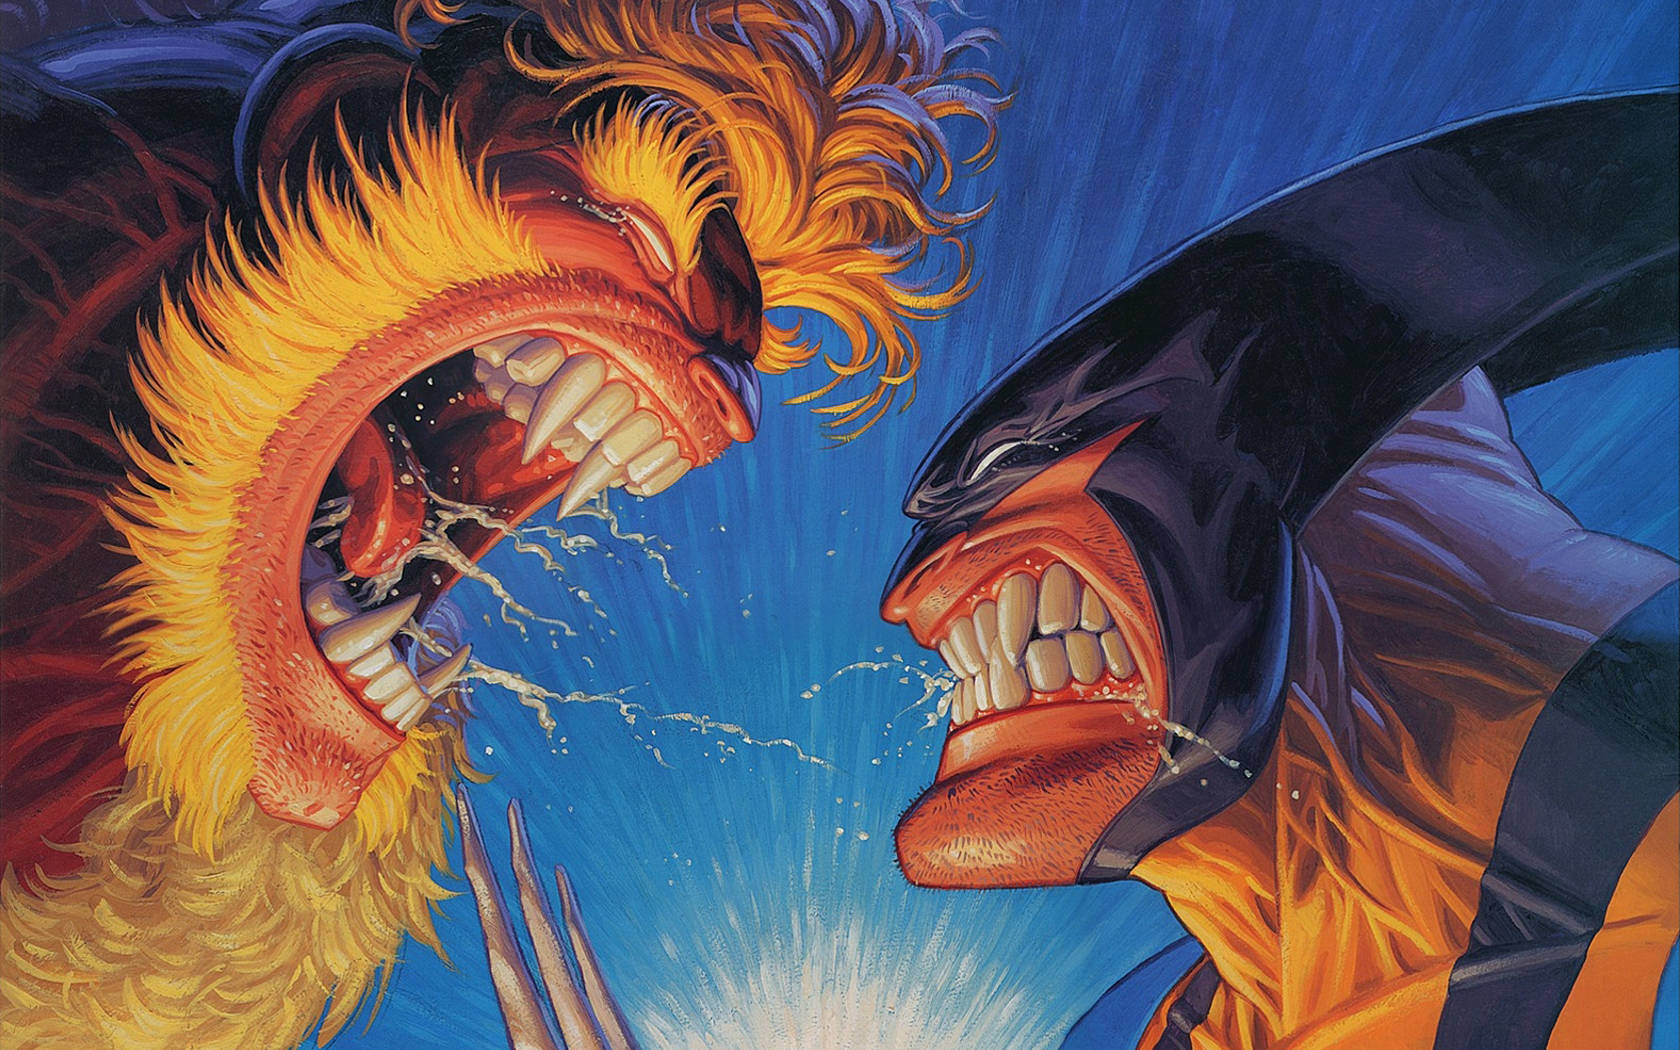 X-men Wolverine Face Off